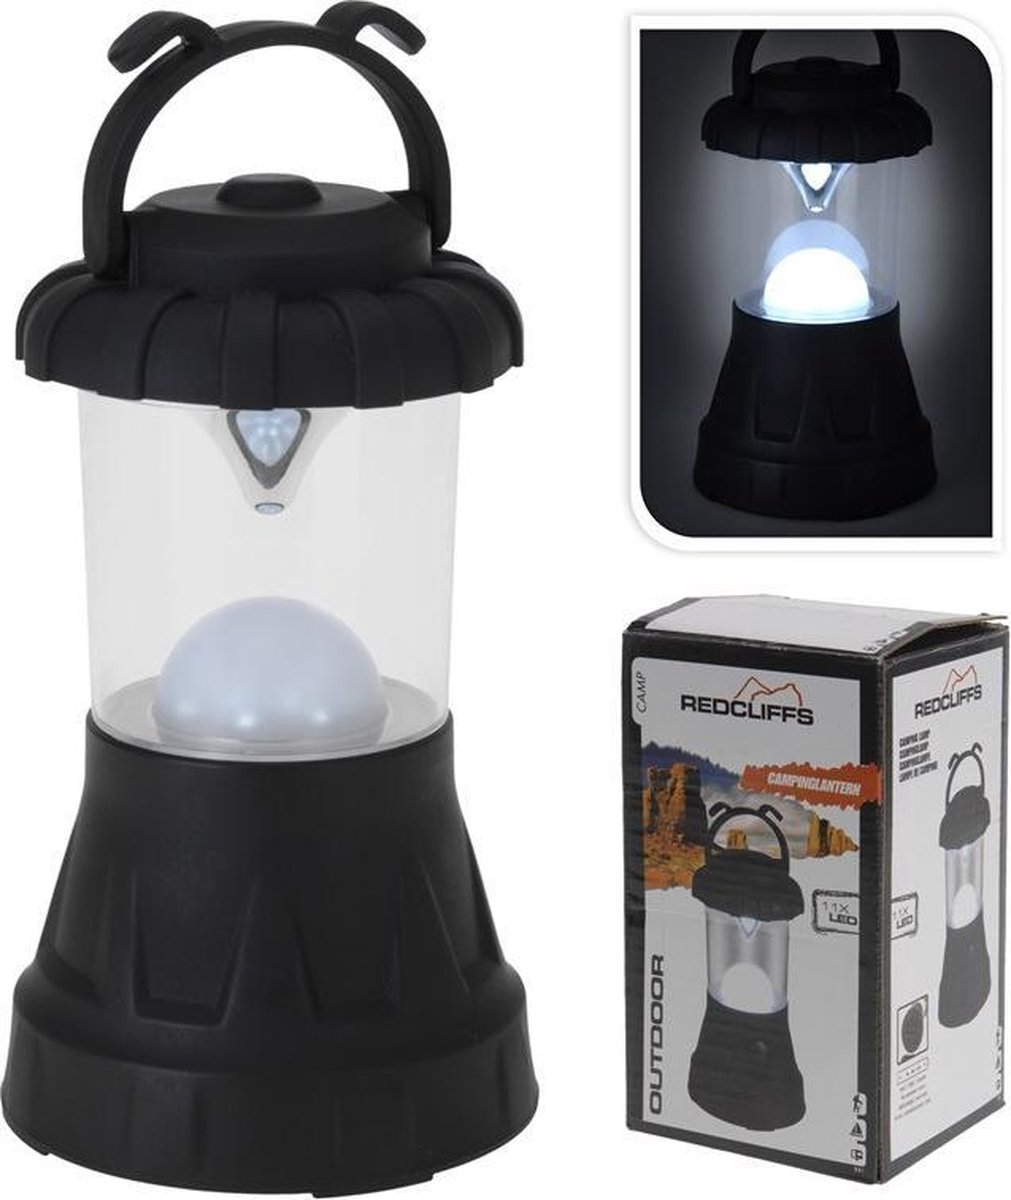 Huismerk Premium Campinglamp - 11 LED - Zwart